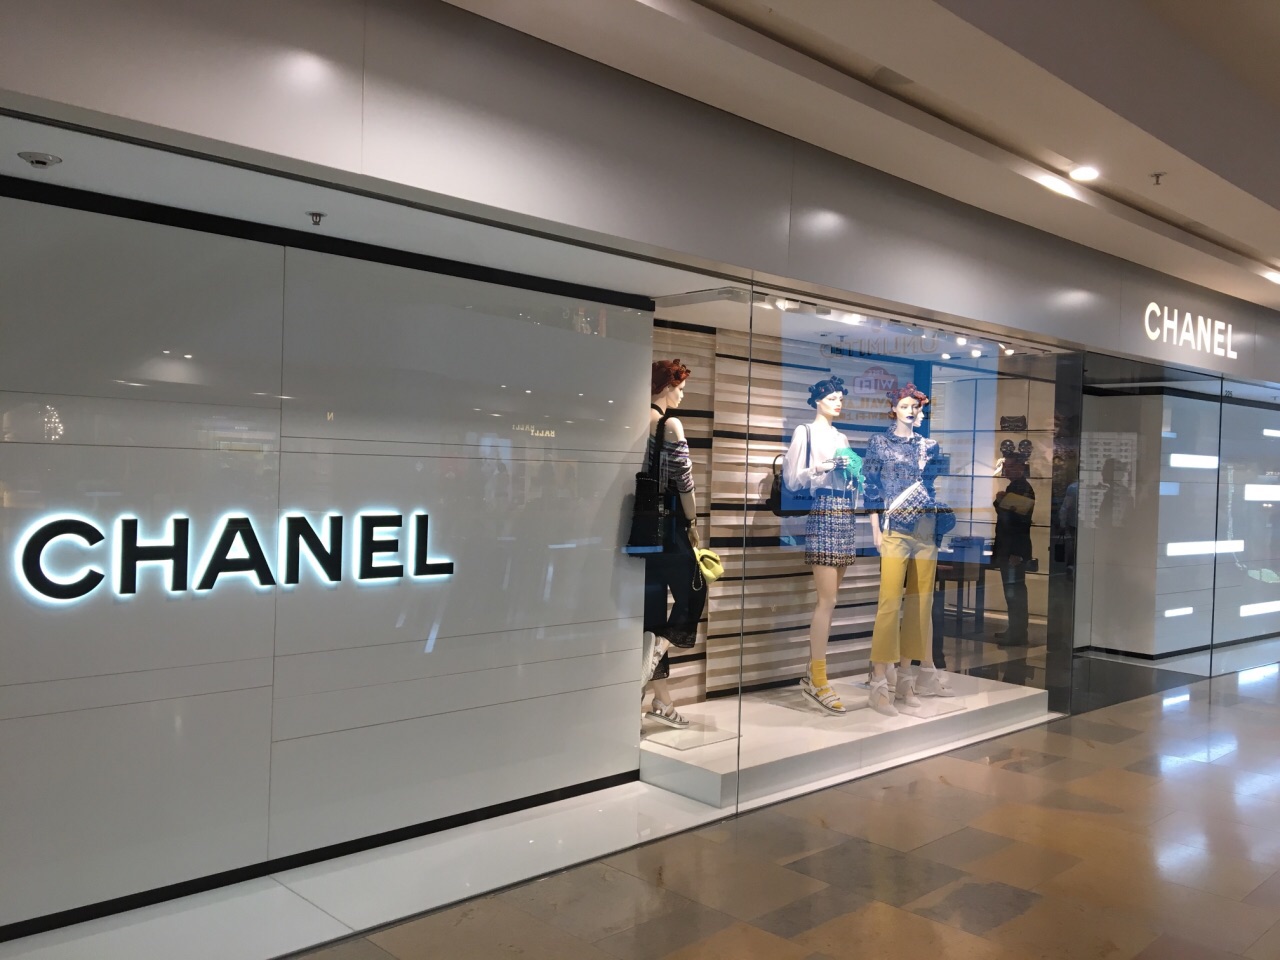 Inside Chanel's New Dubai Boutique